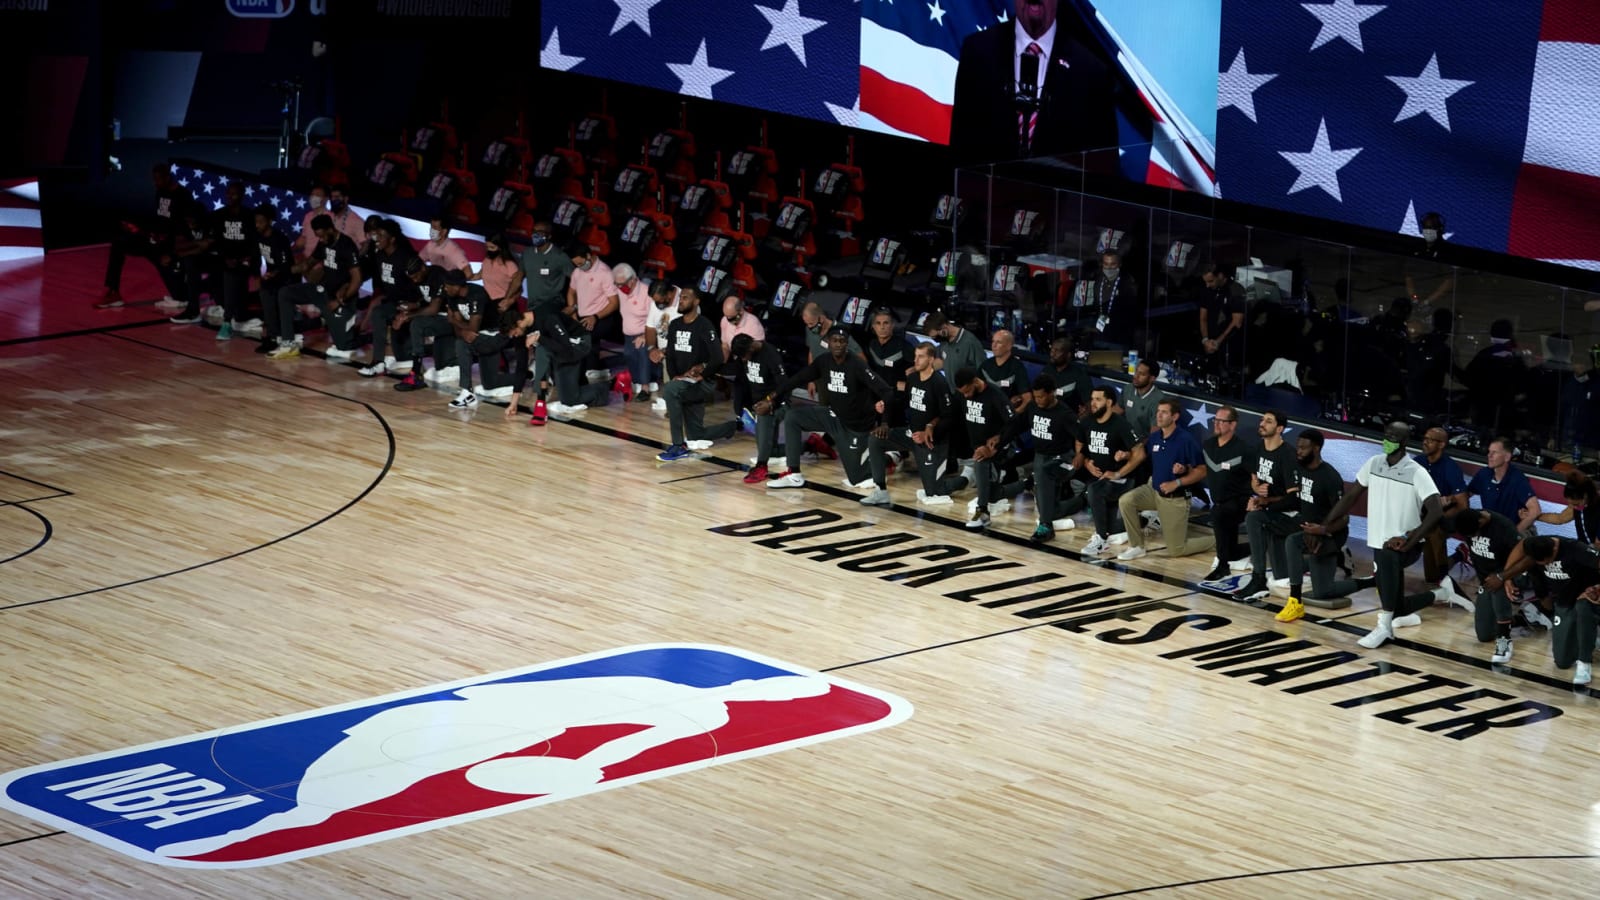 Raptors, Celtics discussing boycotting of NBA playoff game after Jacob Blake shooting